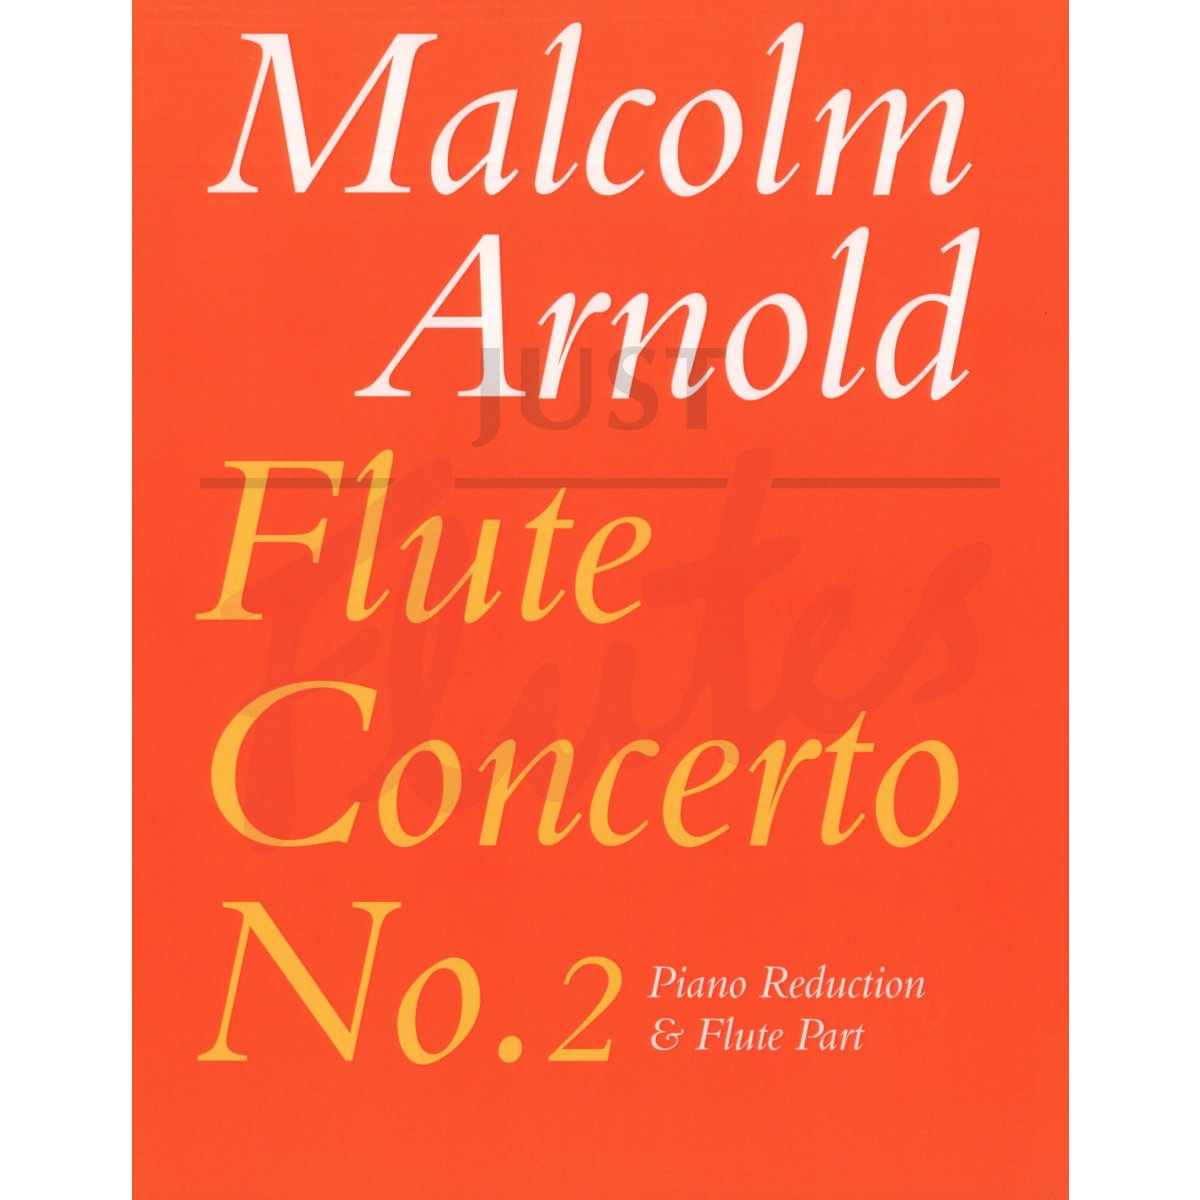 Flute Concerto No 2